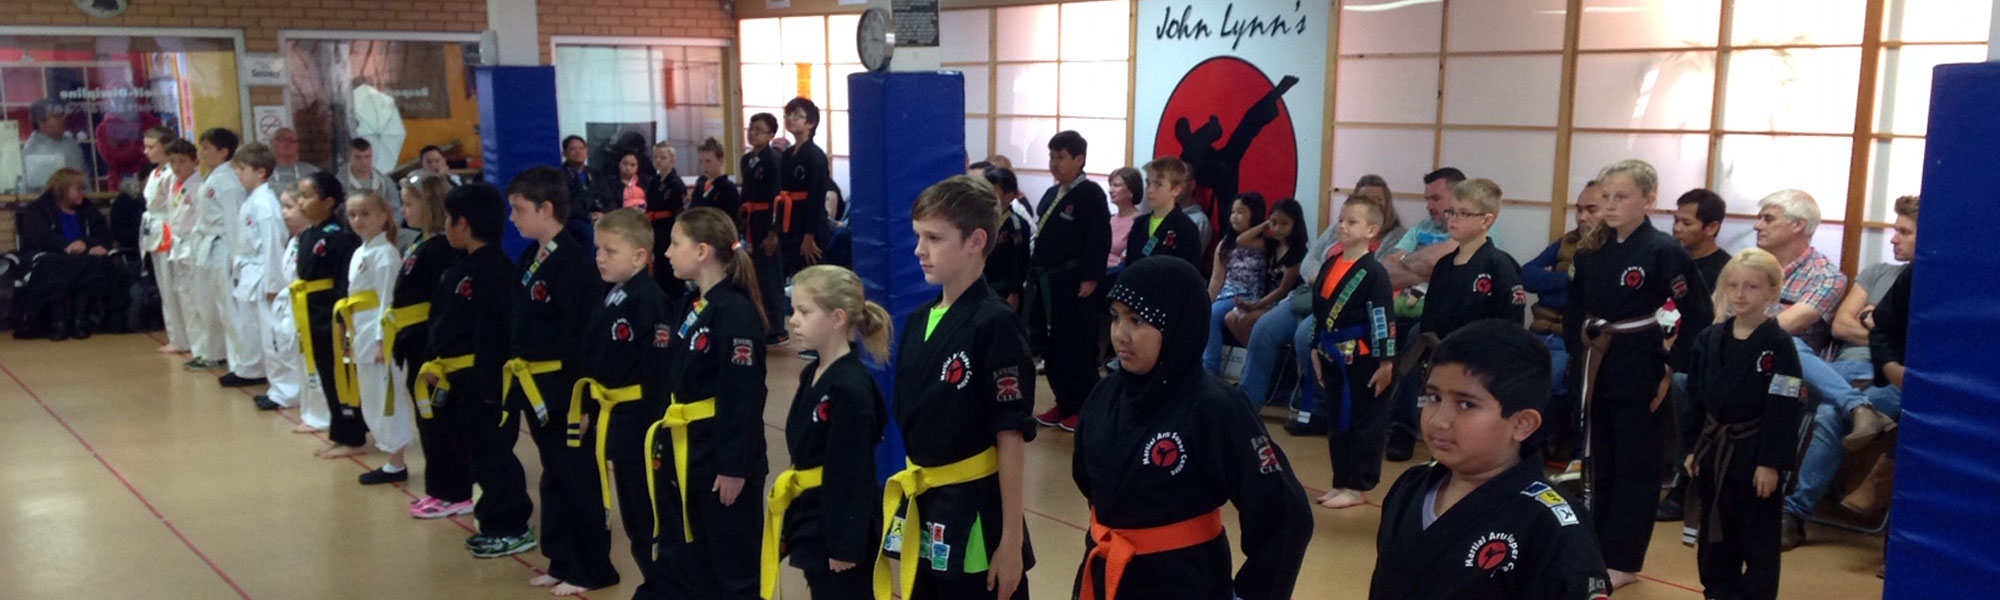 Students standing in John Lynn’s Black Belt Academy karate class using merit badges system